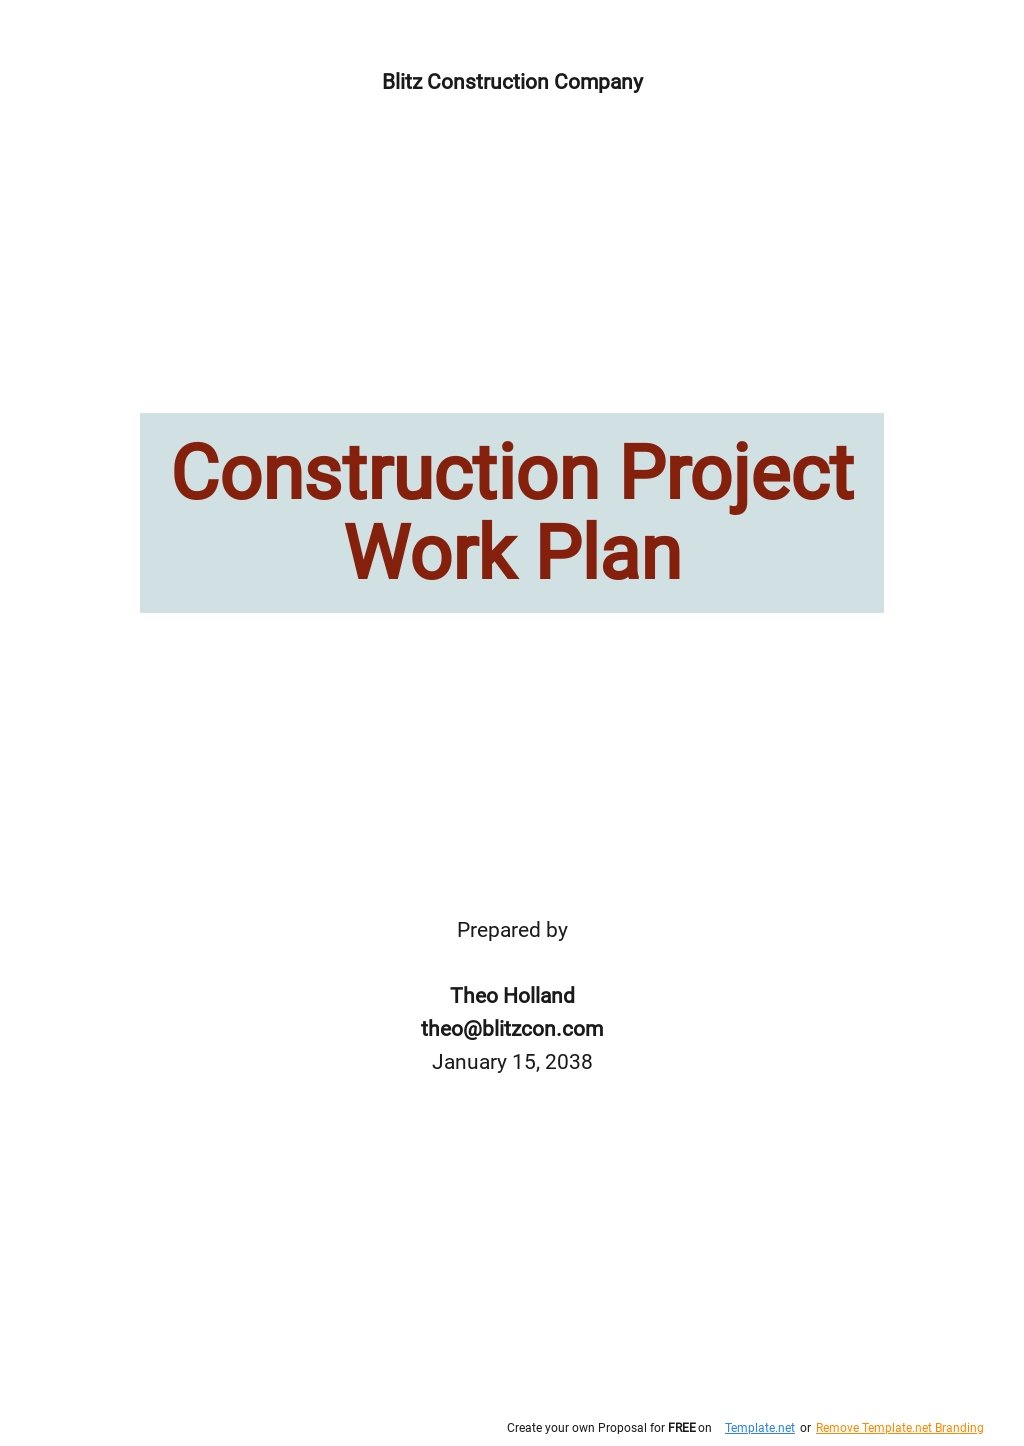 Construction Project Work Plan Template - Google Docs, Word, Apple ...